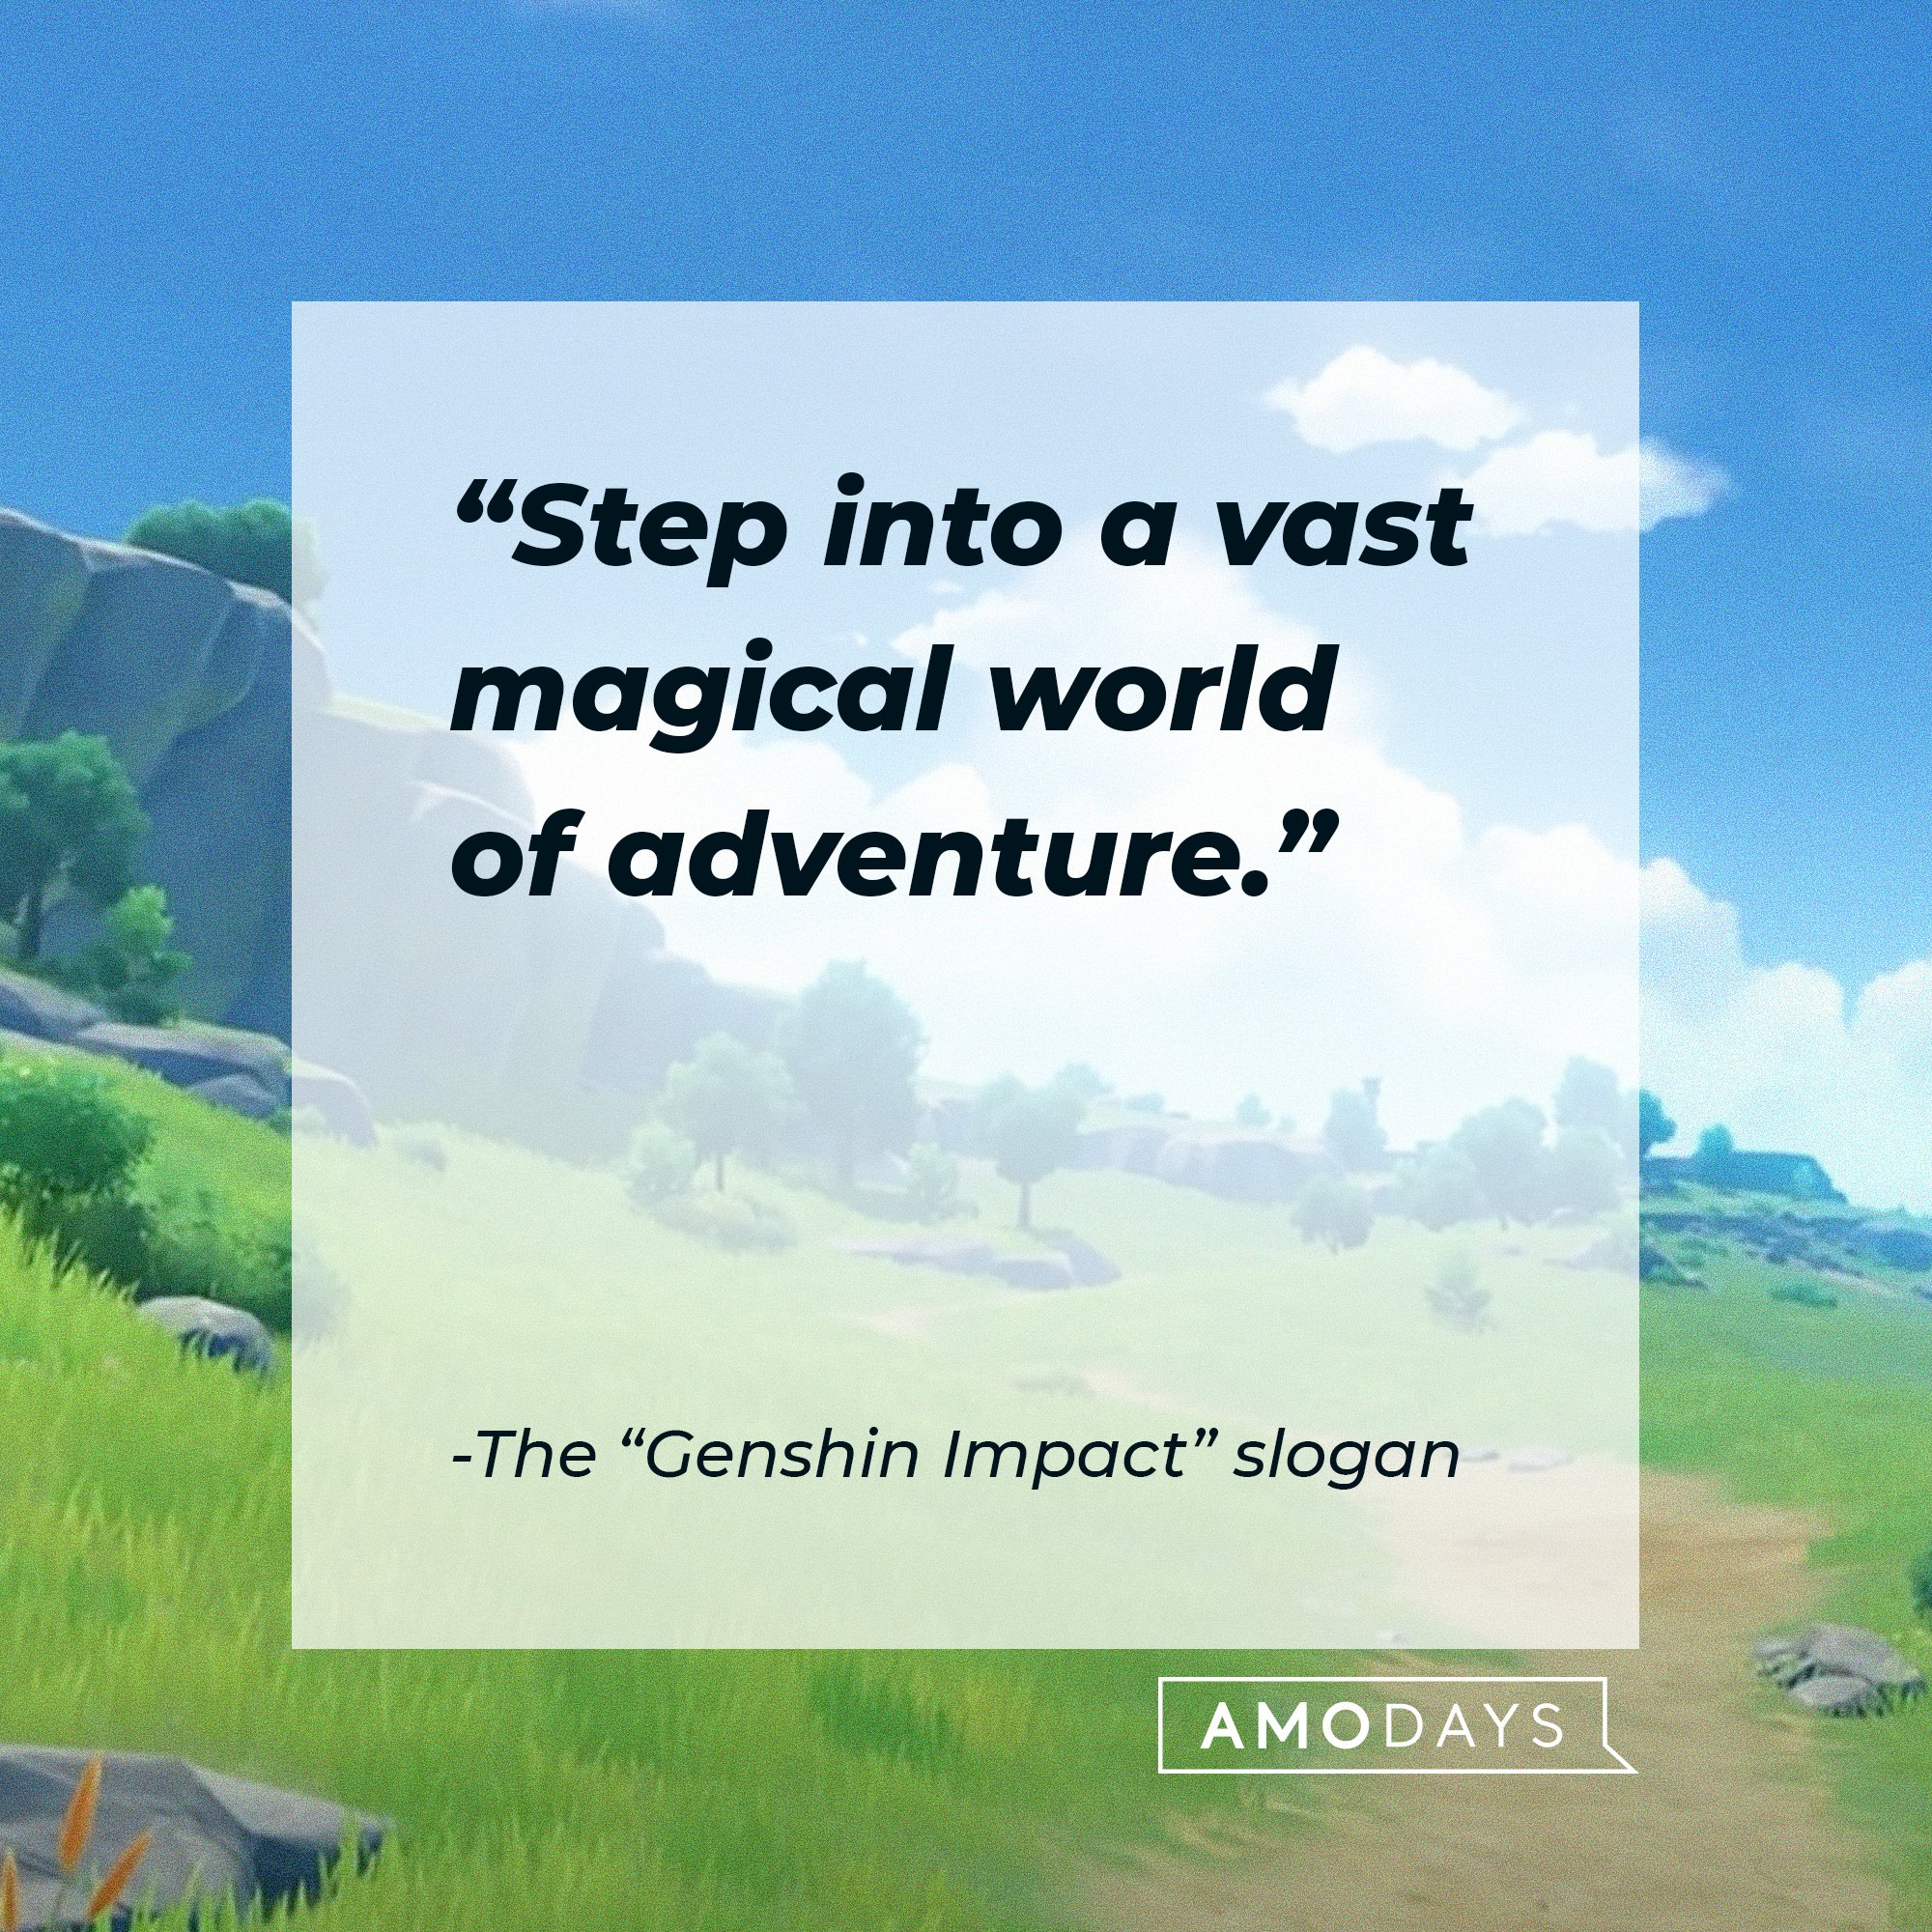 The "Genshin Impact's" slogan: "Step into a vast magical world of adventure." | Image: AmoDays 